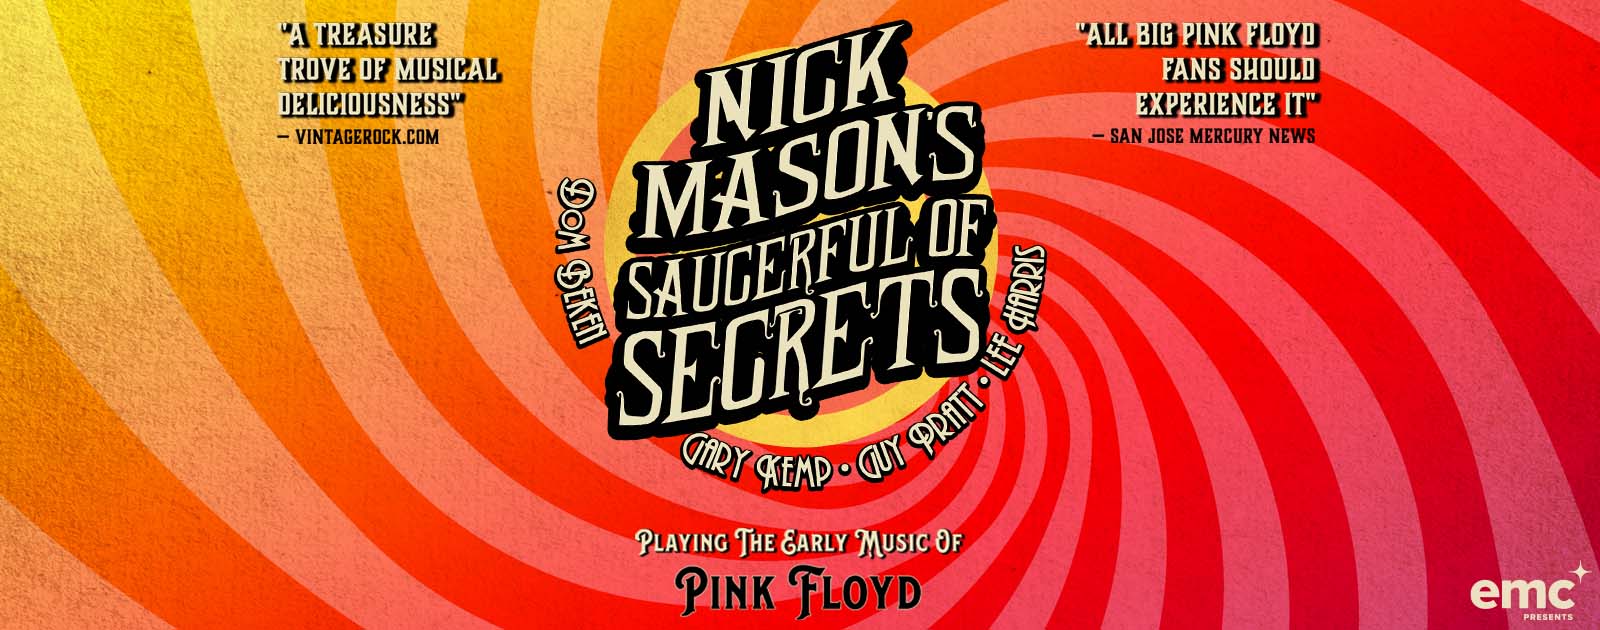 POSTPONED - Nick Mason’s Saucerful of Secrets